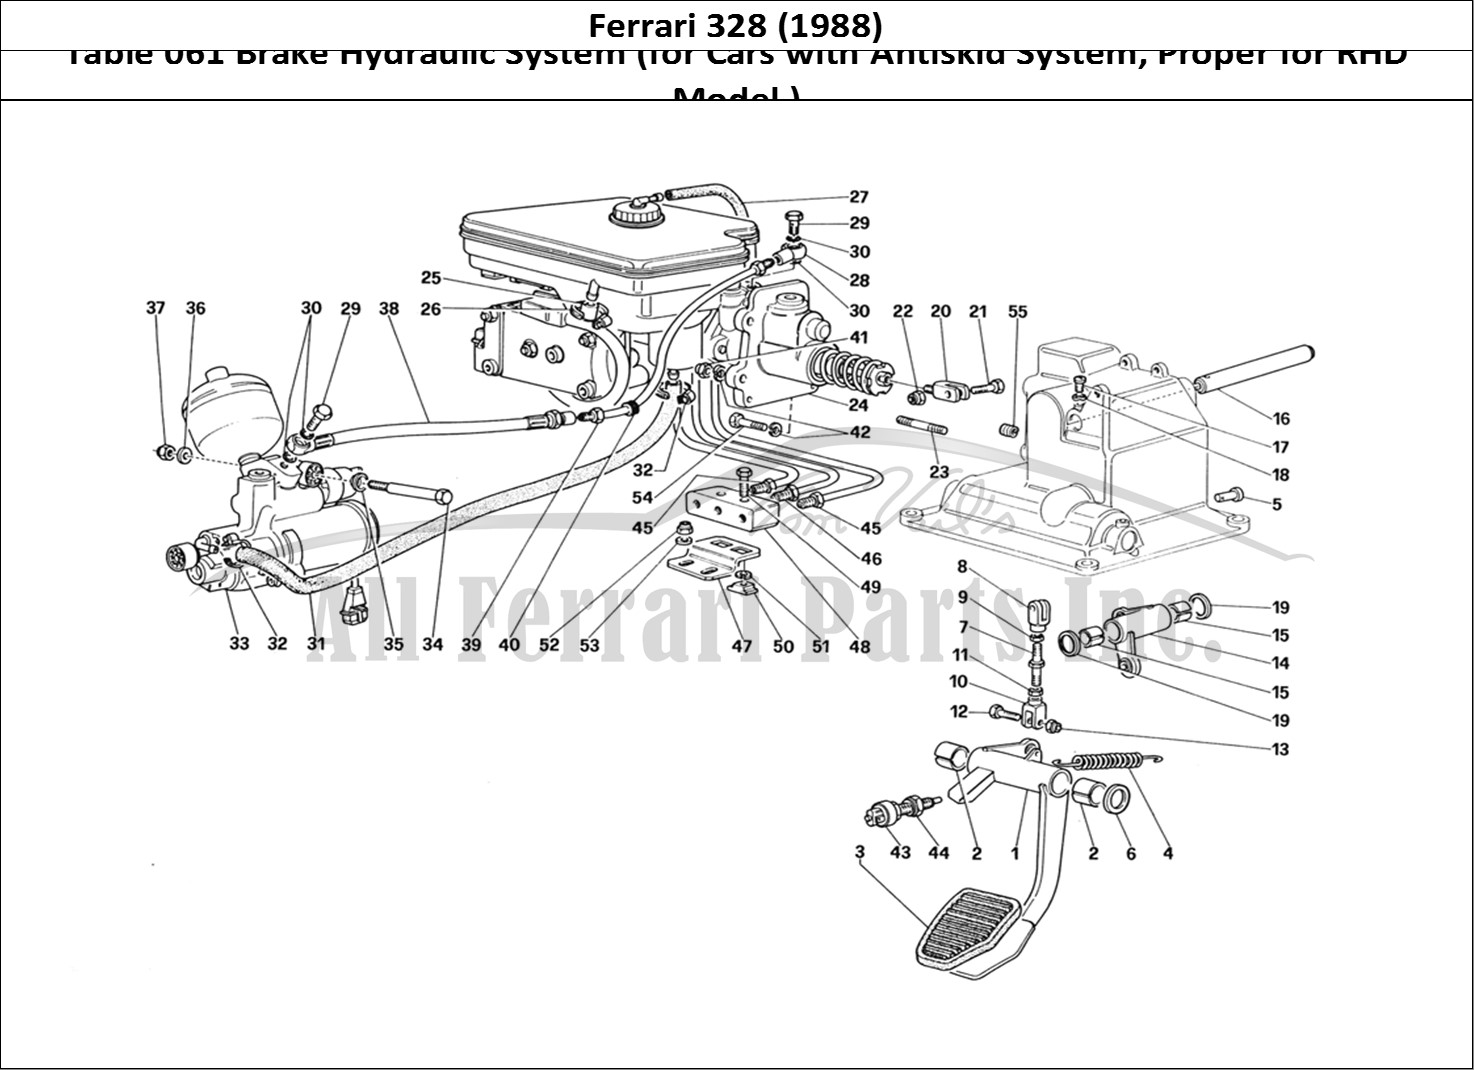 Ferrari Parts Ferrari 328 (1988) Page 061 Brake Hydraulic System (f